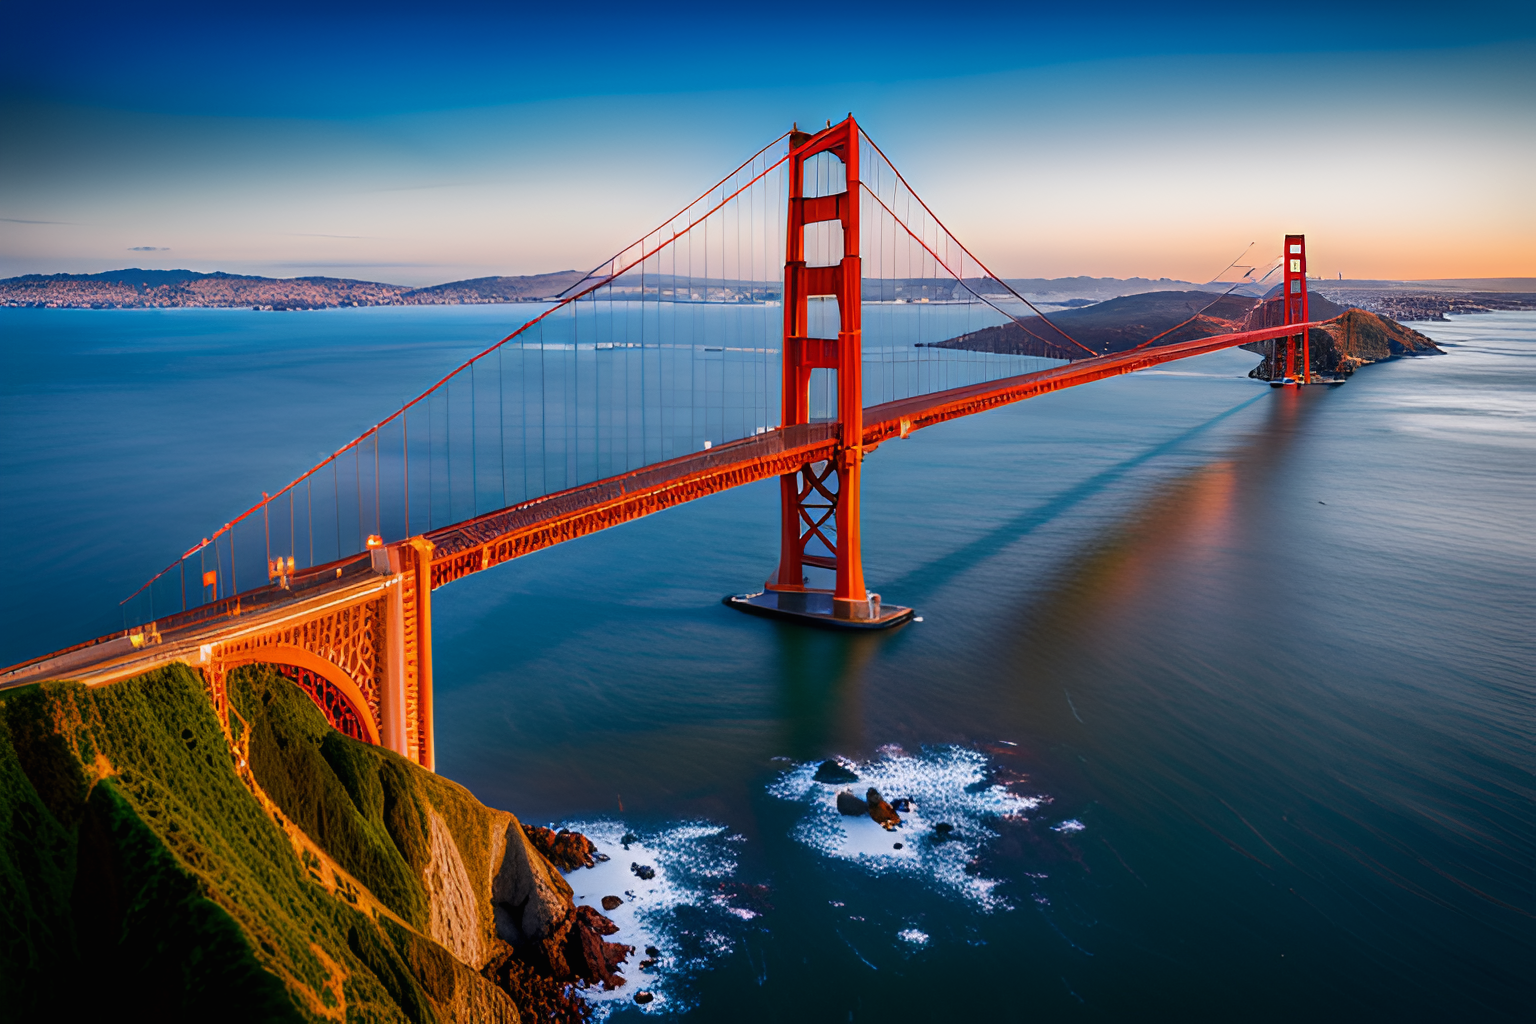 Model of the Golden Gate Bridge in San Francisco